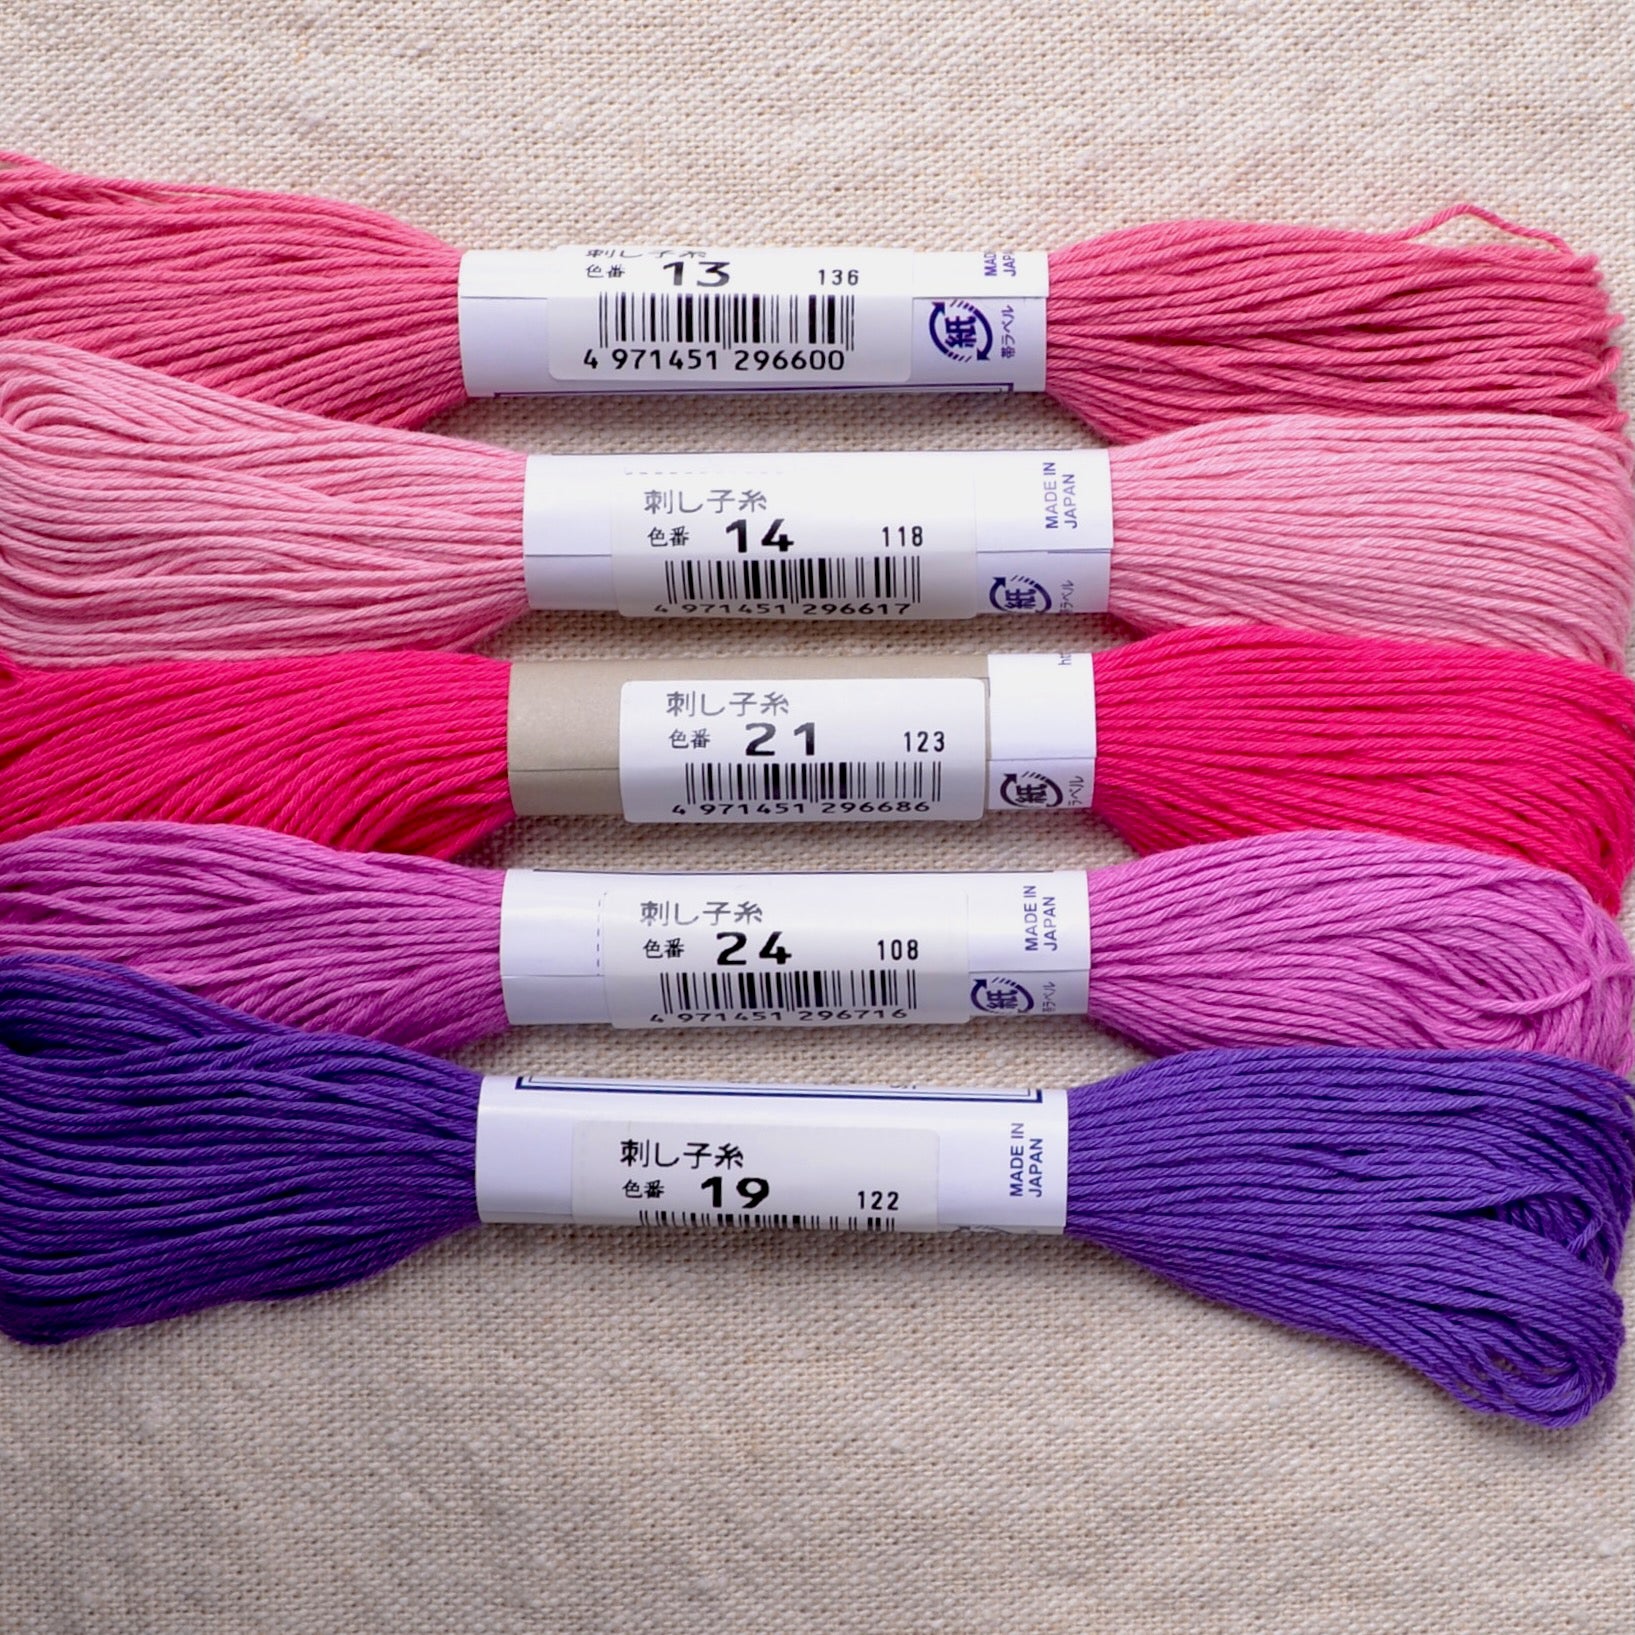 pink sashiko threads, and a purple